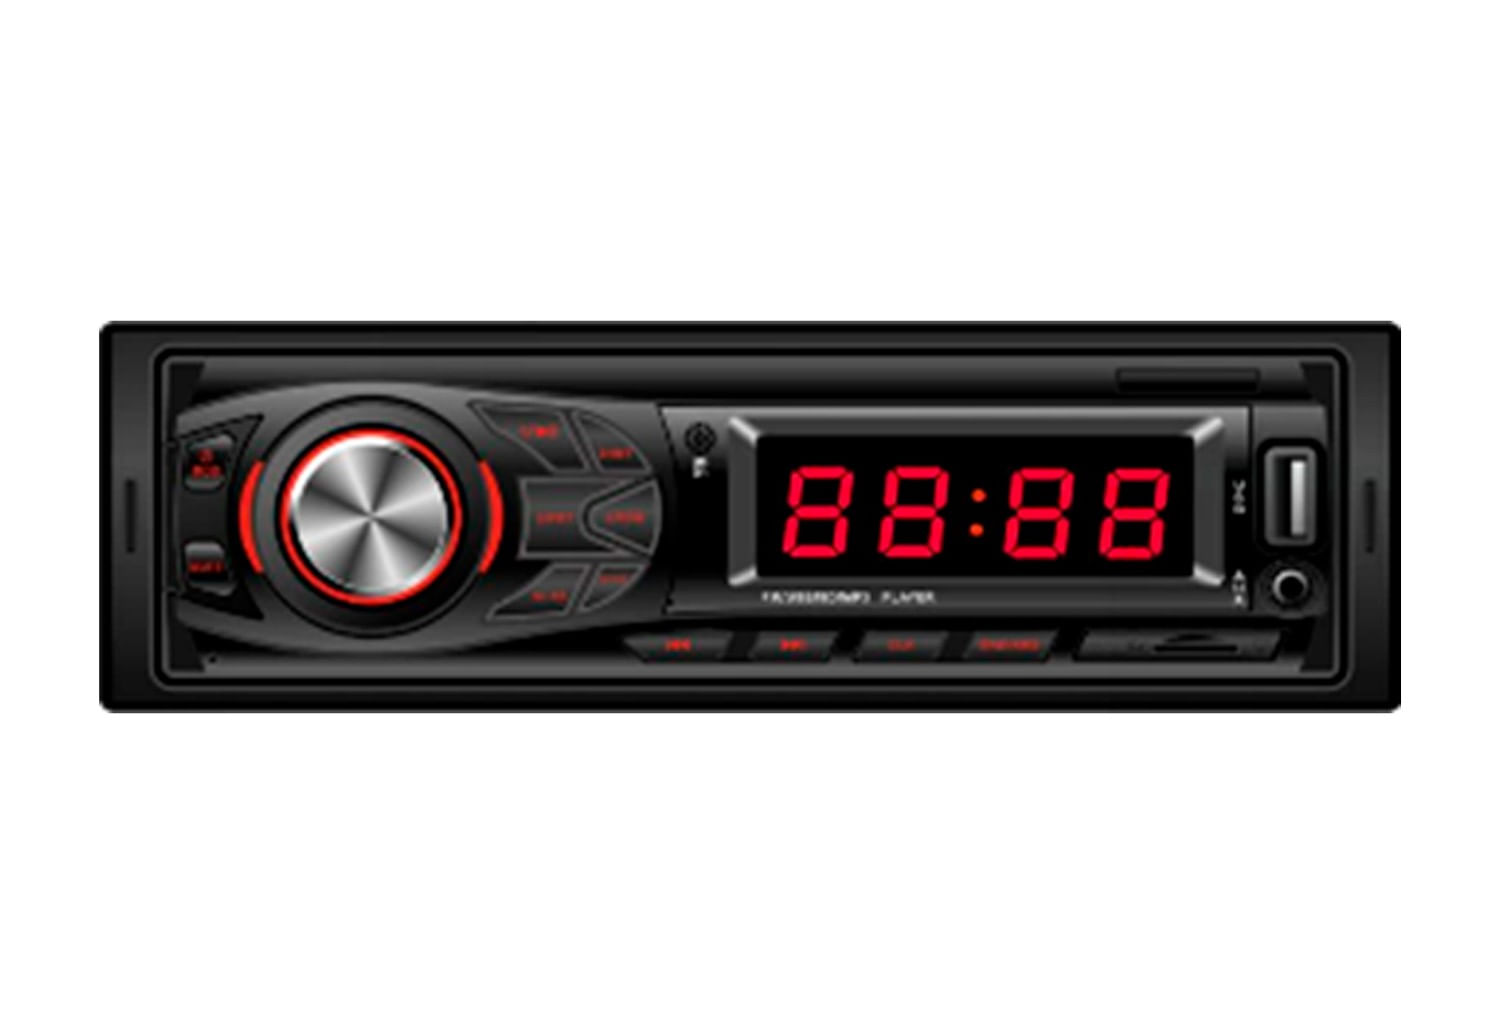 Radio para carro, mp3, fm, mp3, usb, micro sd, Bluetooth